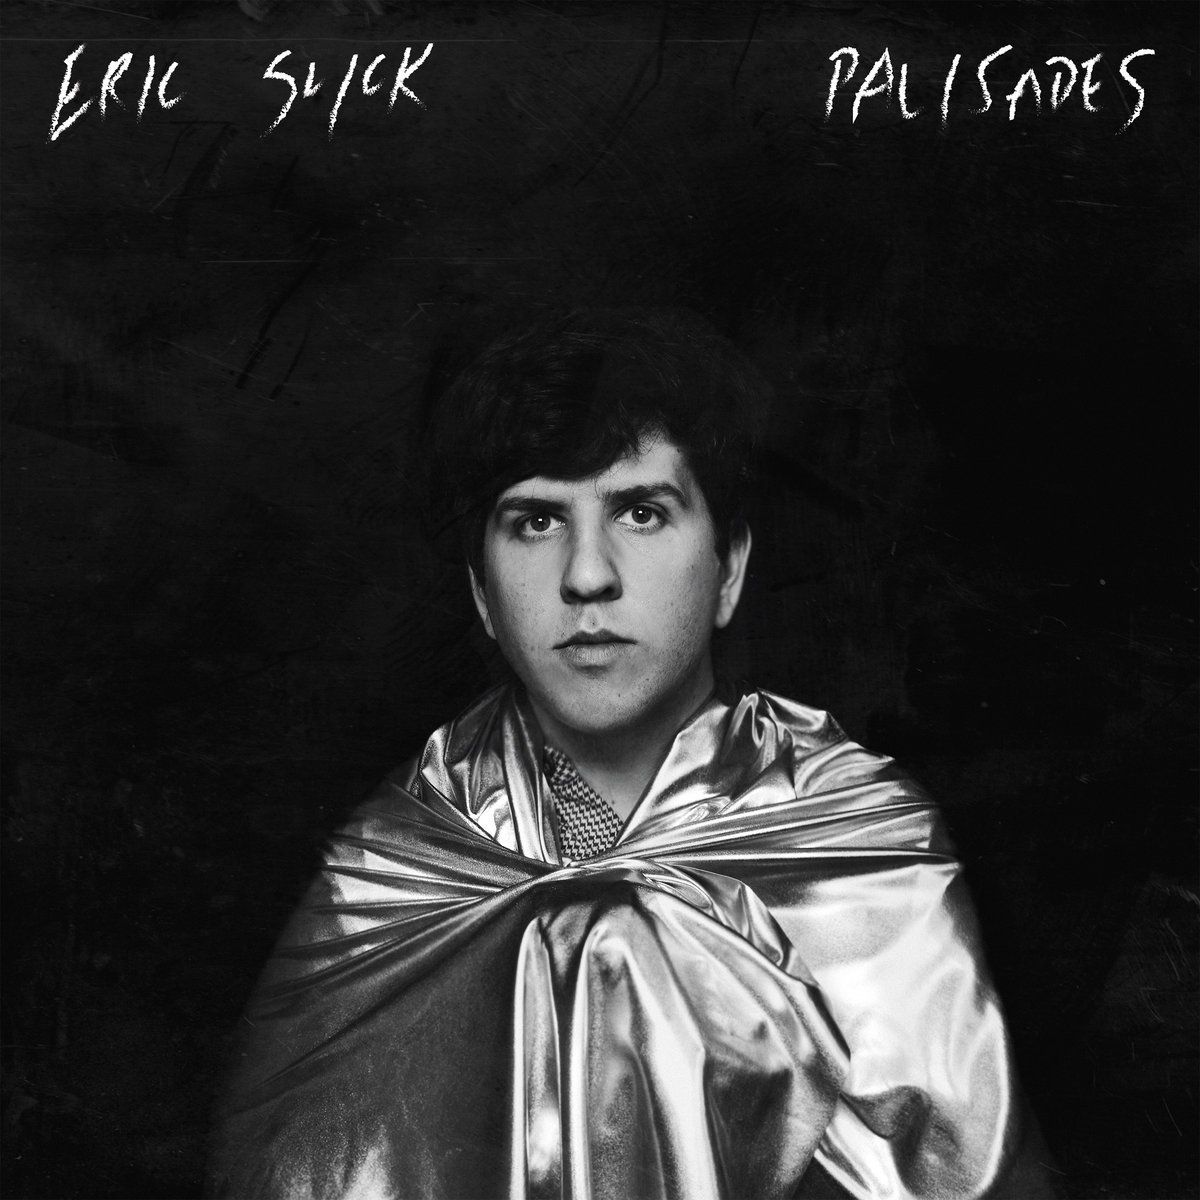 eric slick palisades stream album listen Dr. Dogs Eric Slick premieres debut album Palisades: Stream